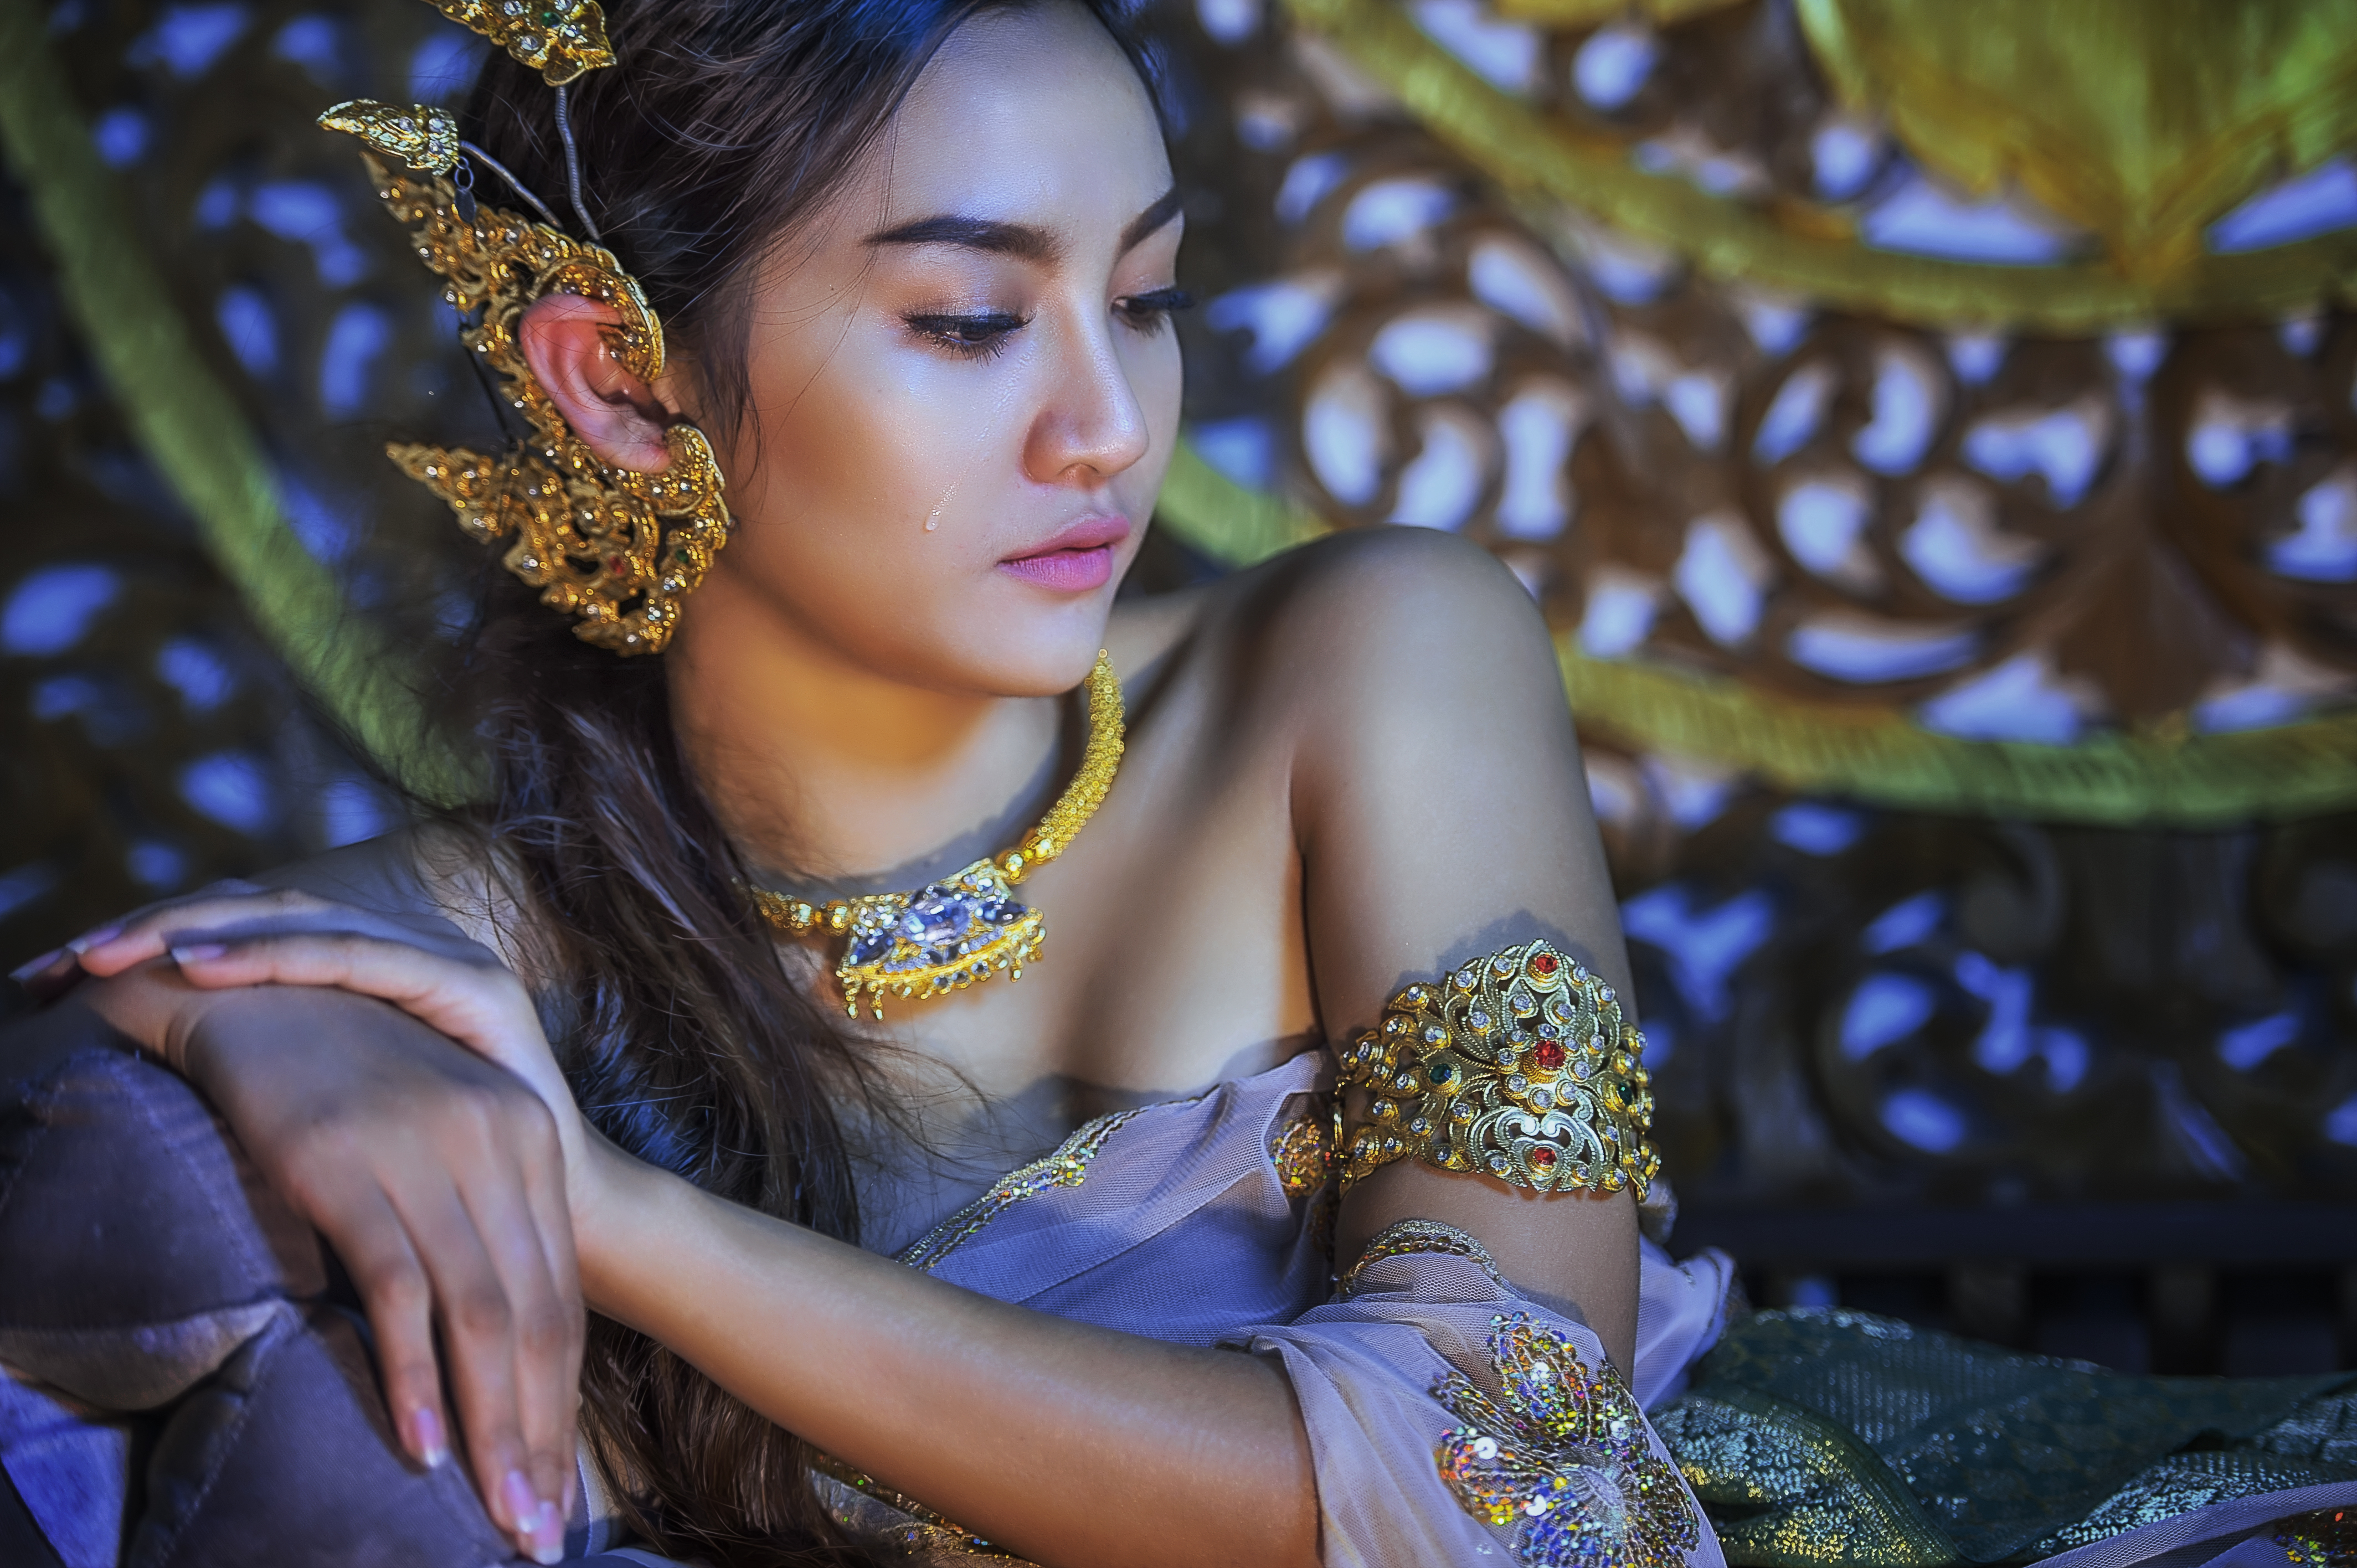 685179 descargar imagen mujeres, asiática, aretes, joyas, modelo, collar, tailandés: fondos de pantalla y protectores de pantalla gratis